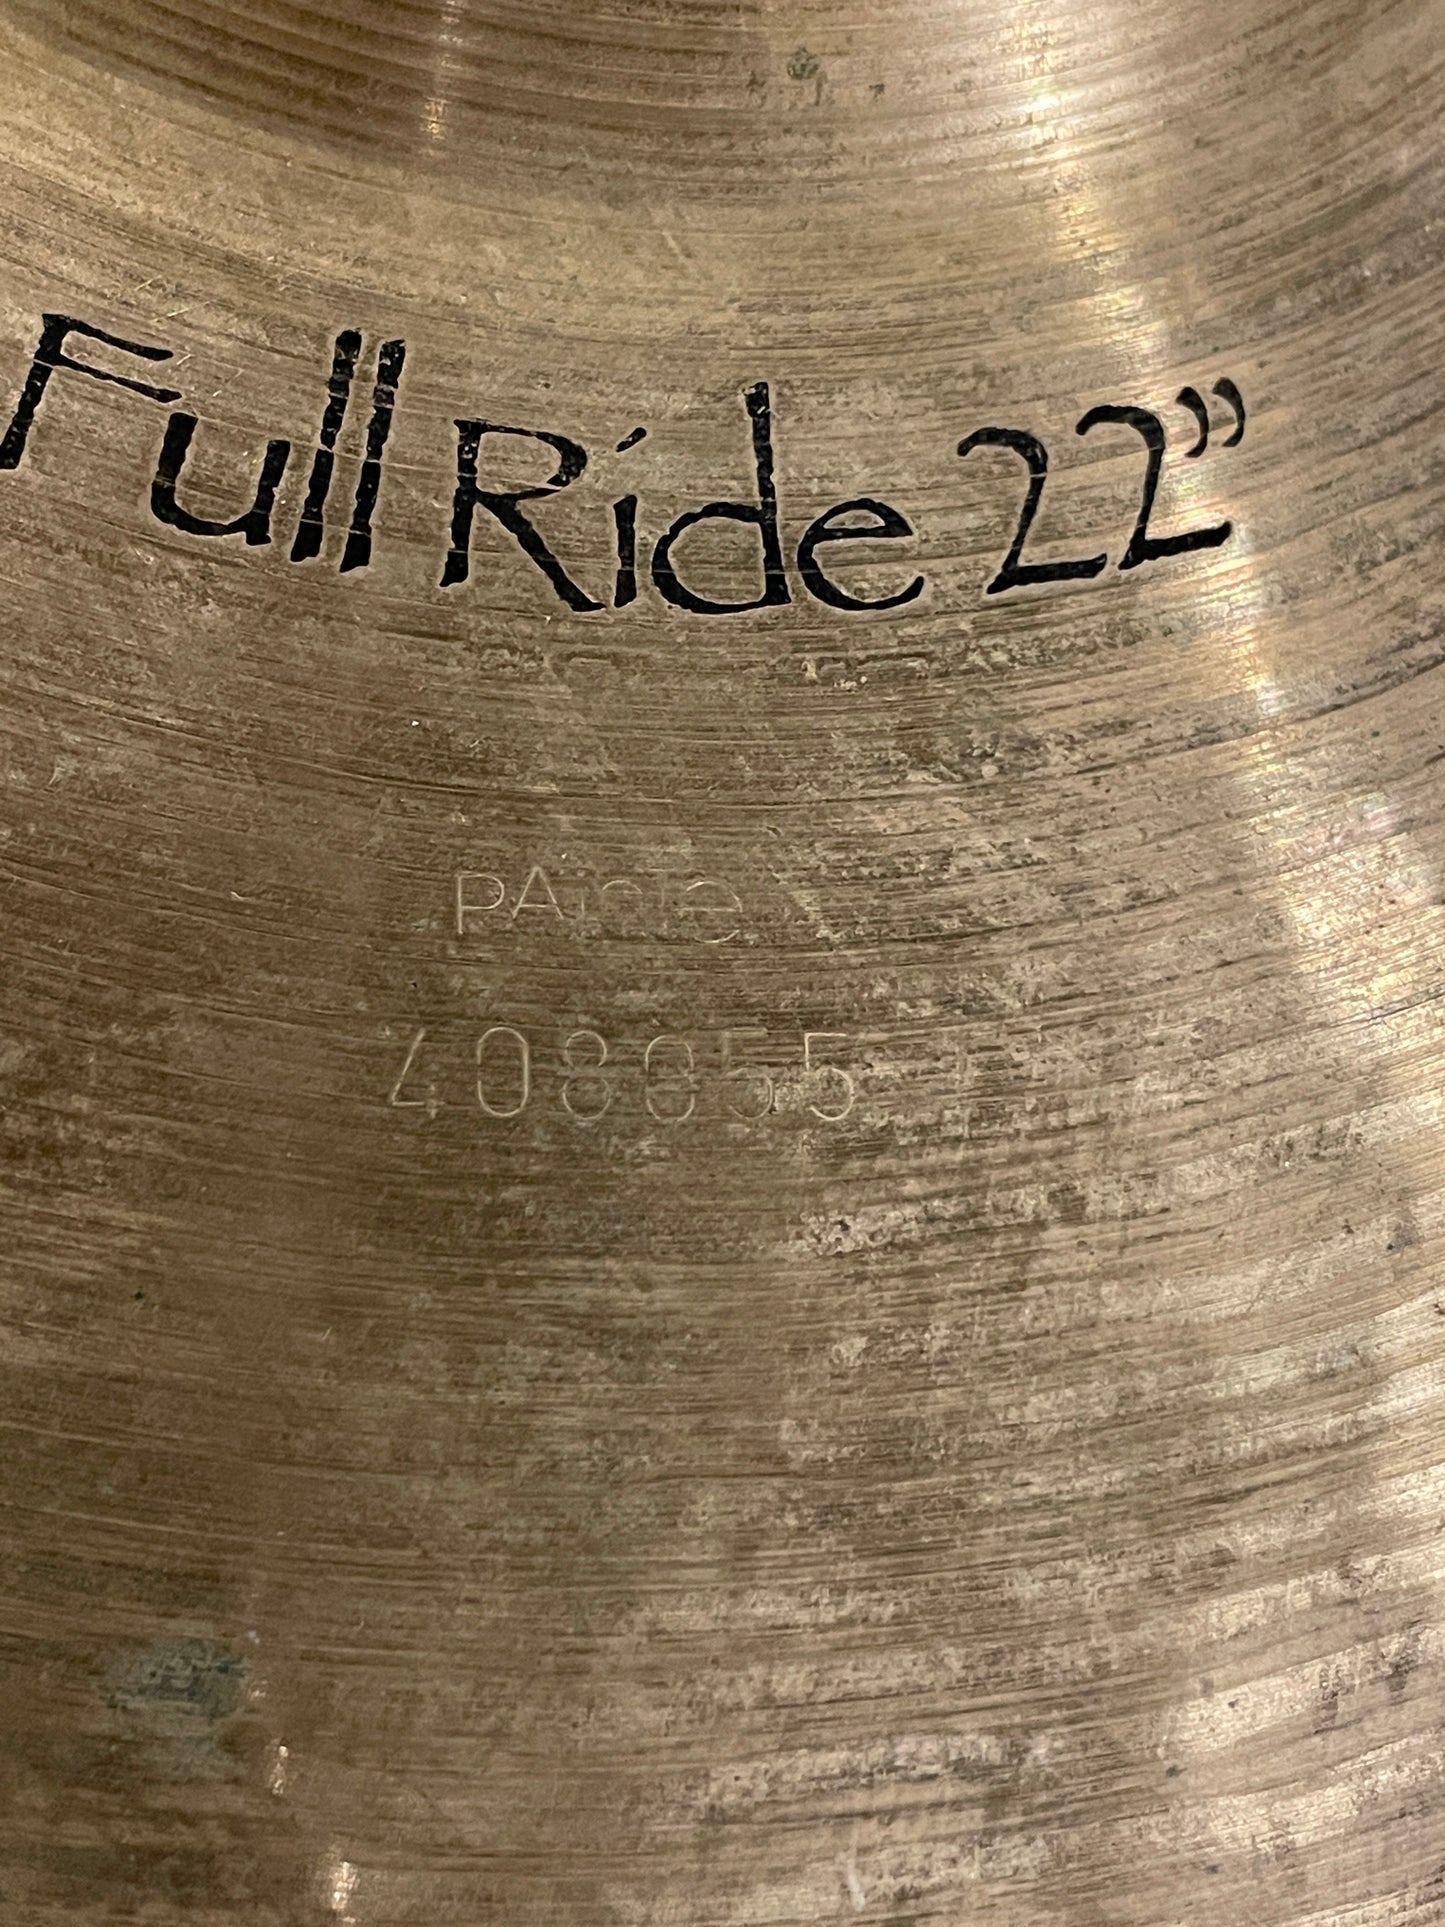 22" Paiste Signature Full Ride Cymbal 3252g